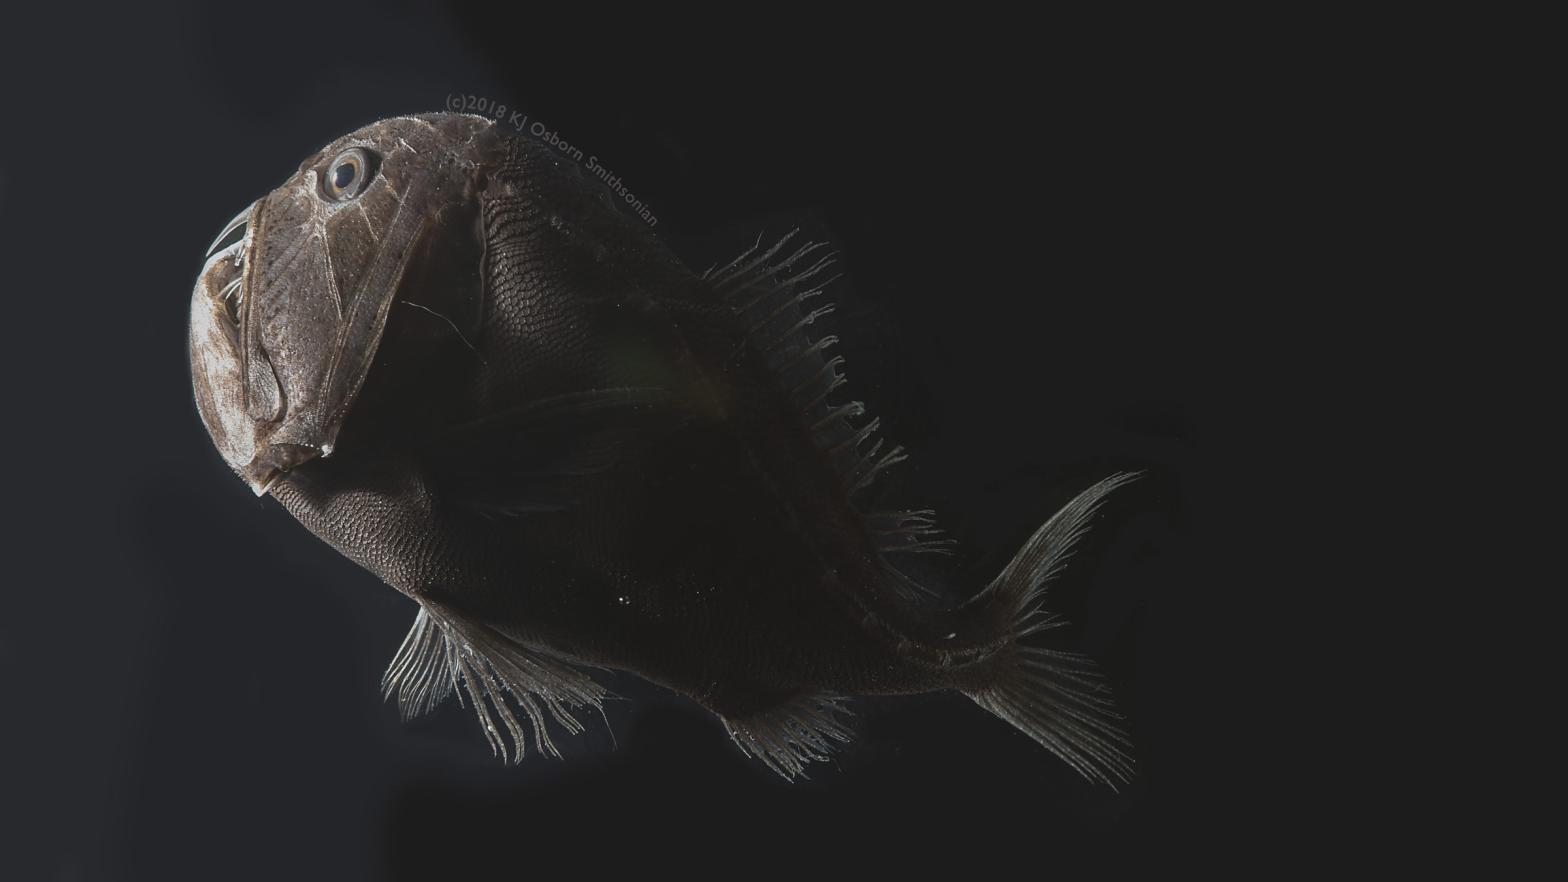 One specimen of the ultra-black fish species Anoplogaster cornuta. (Image: Karen Osborn, Smithsonian)